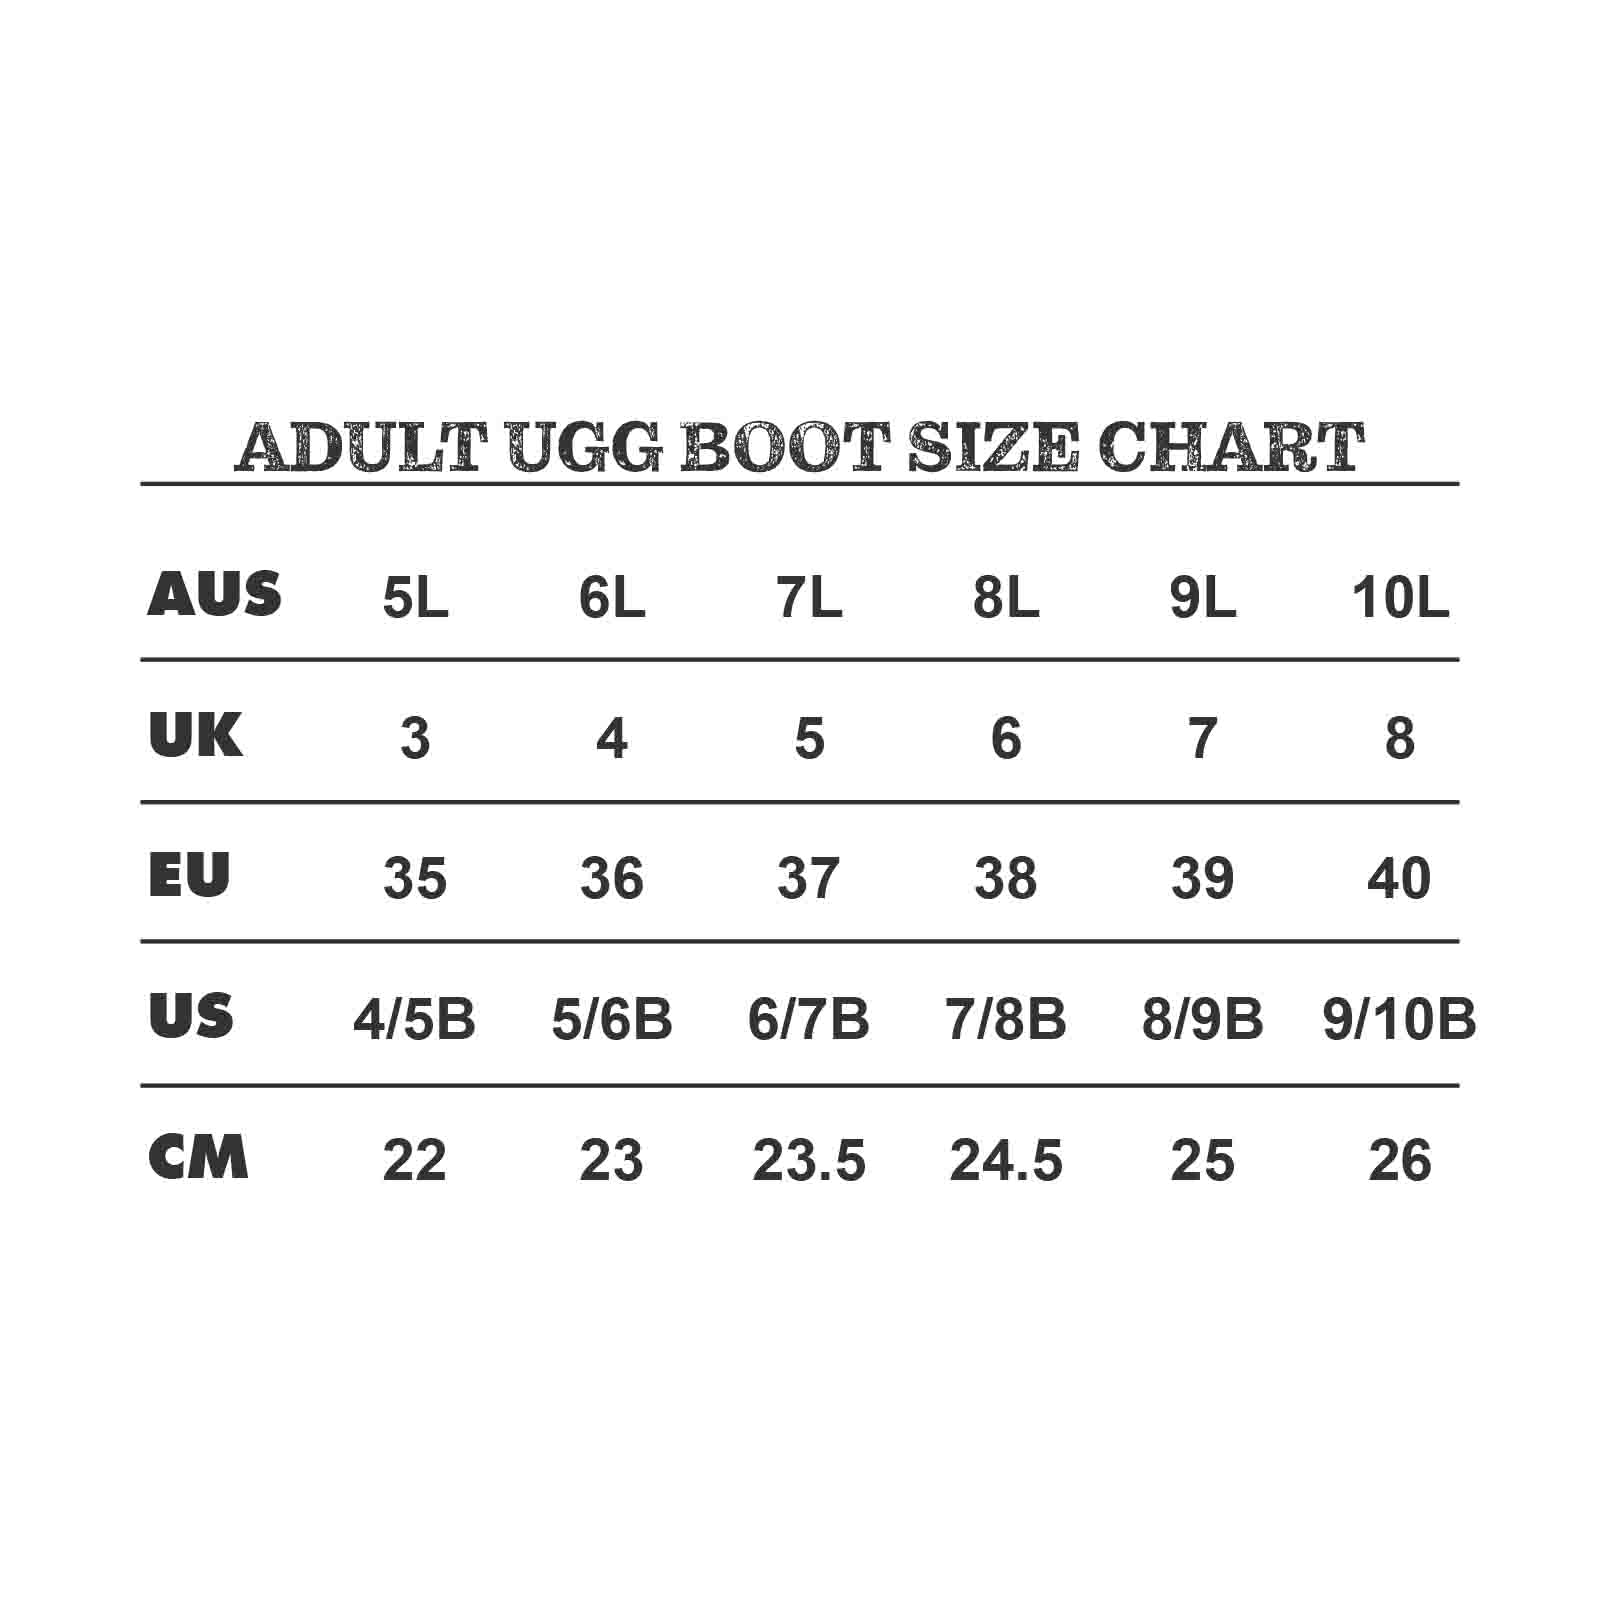 Ozwear UGG Boots Classic Short Black